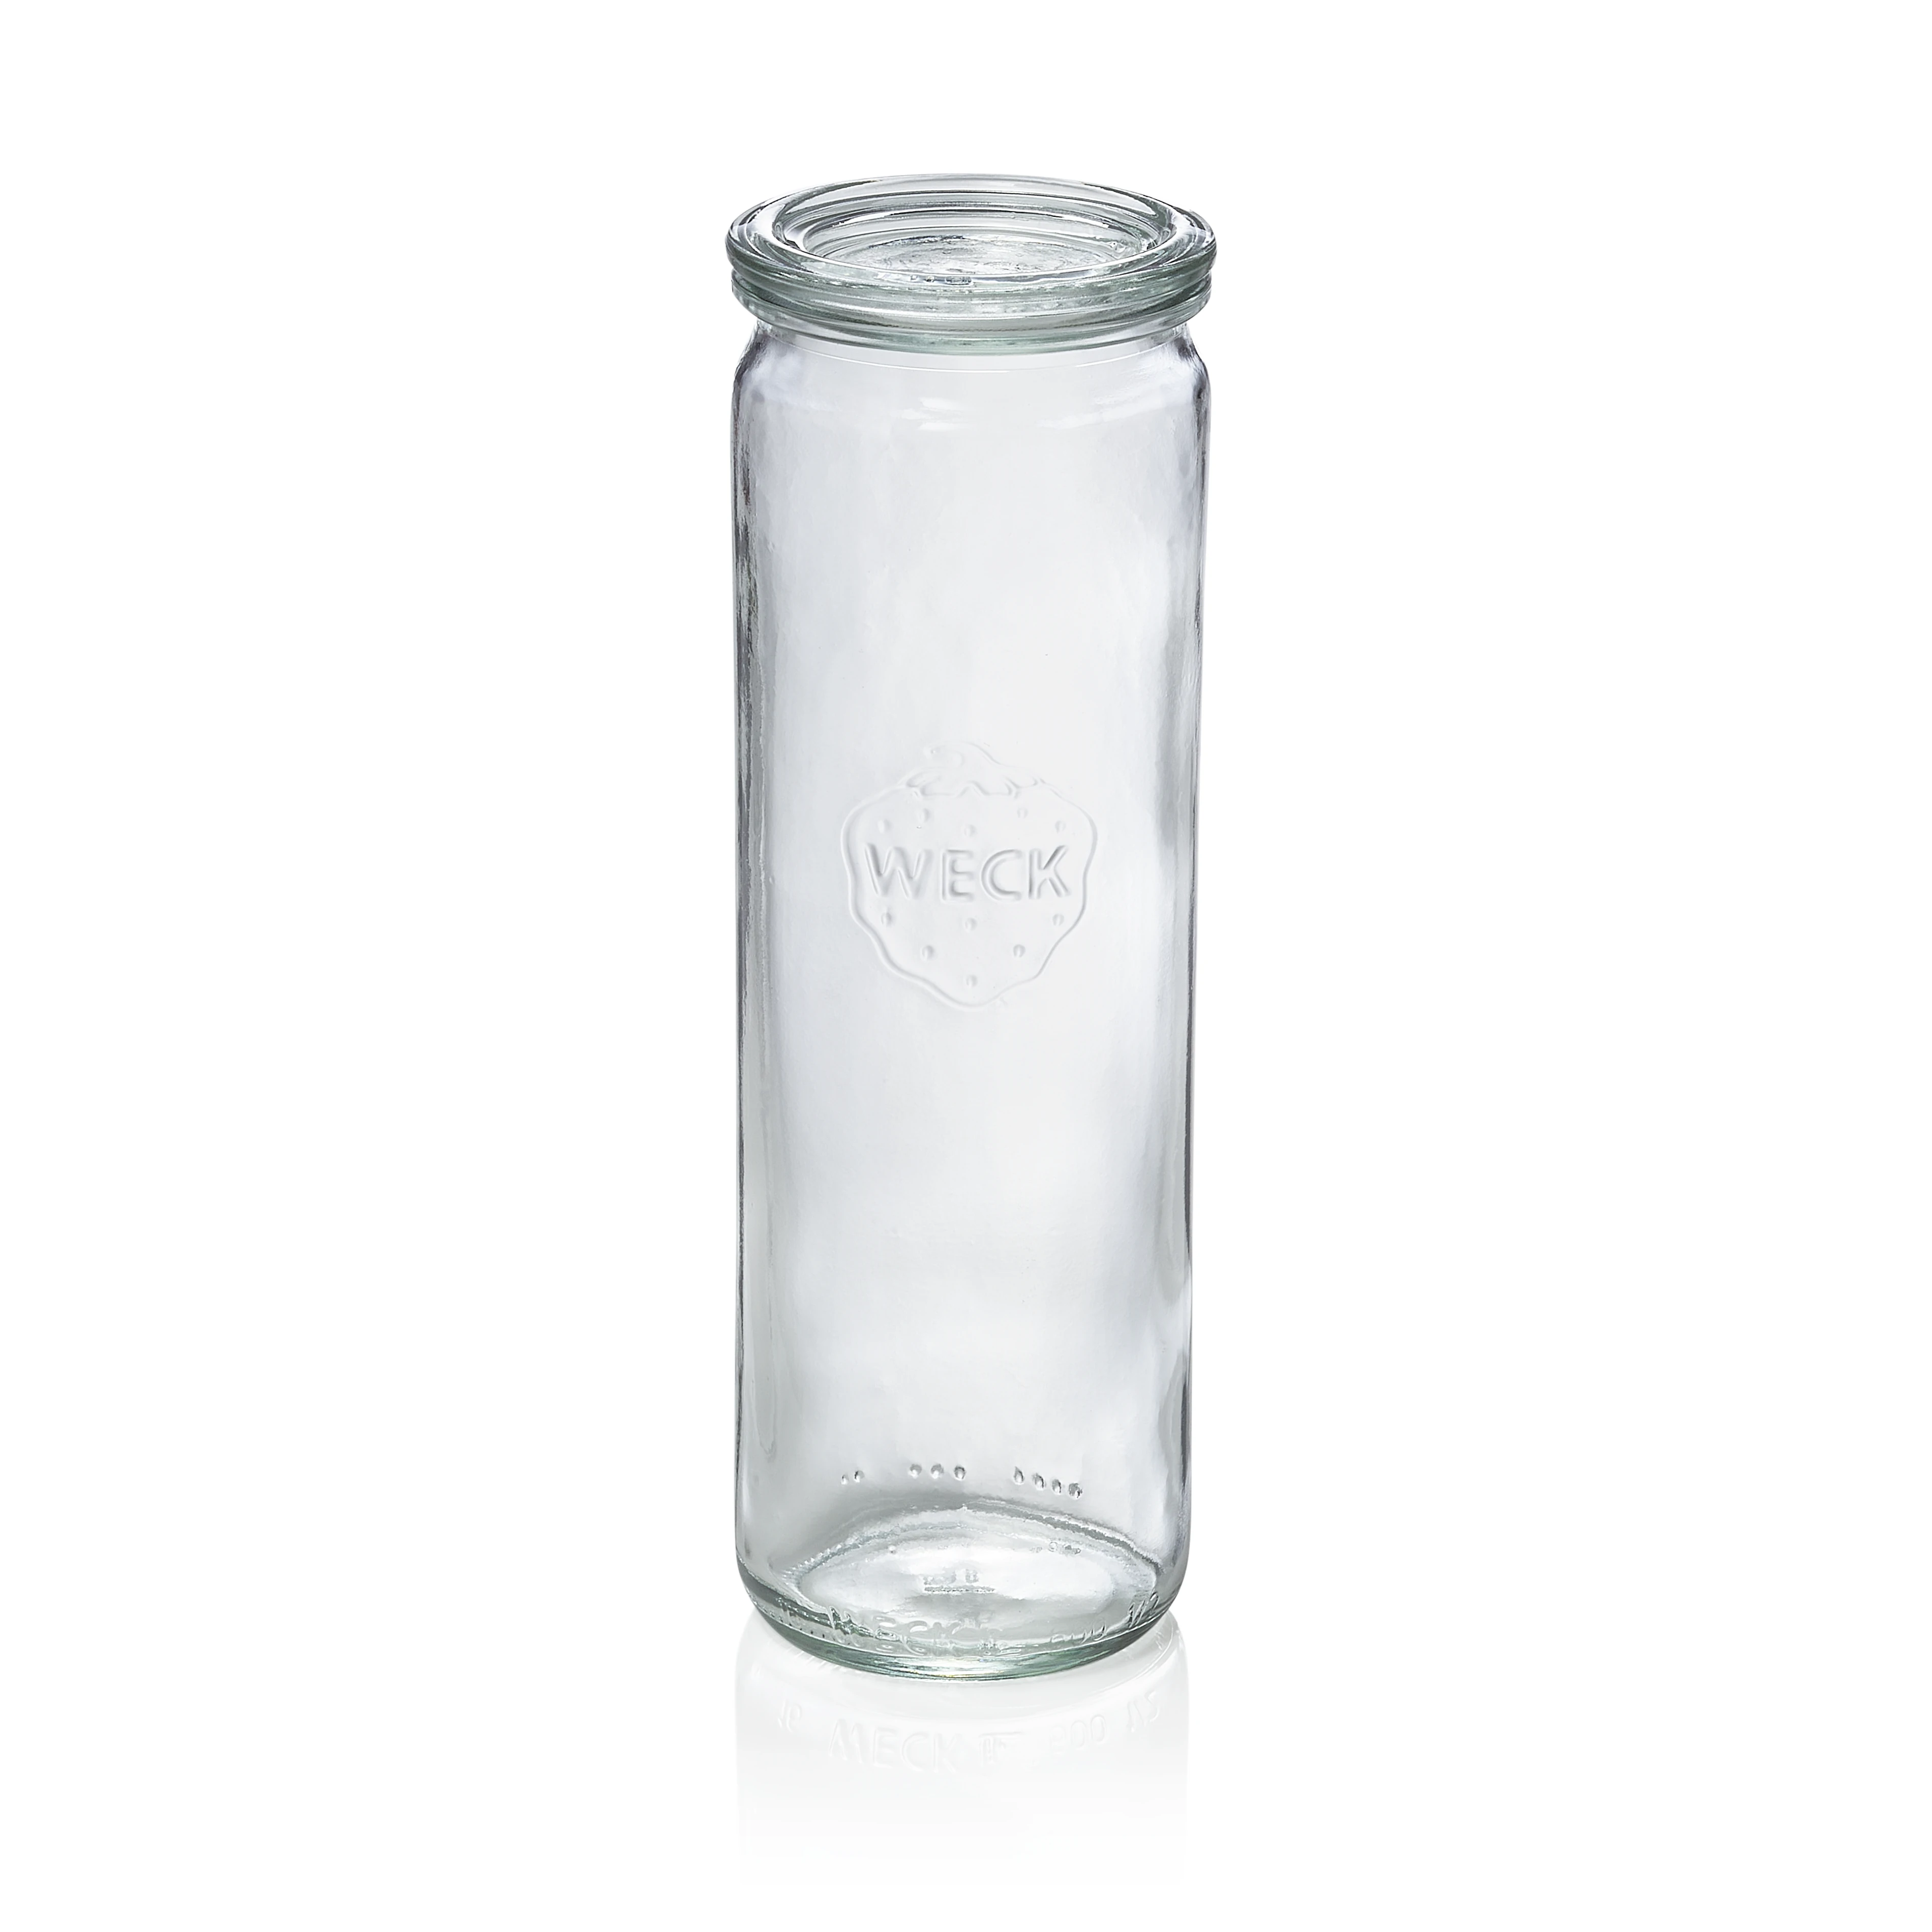 Cylinder shape glass jar